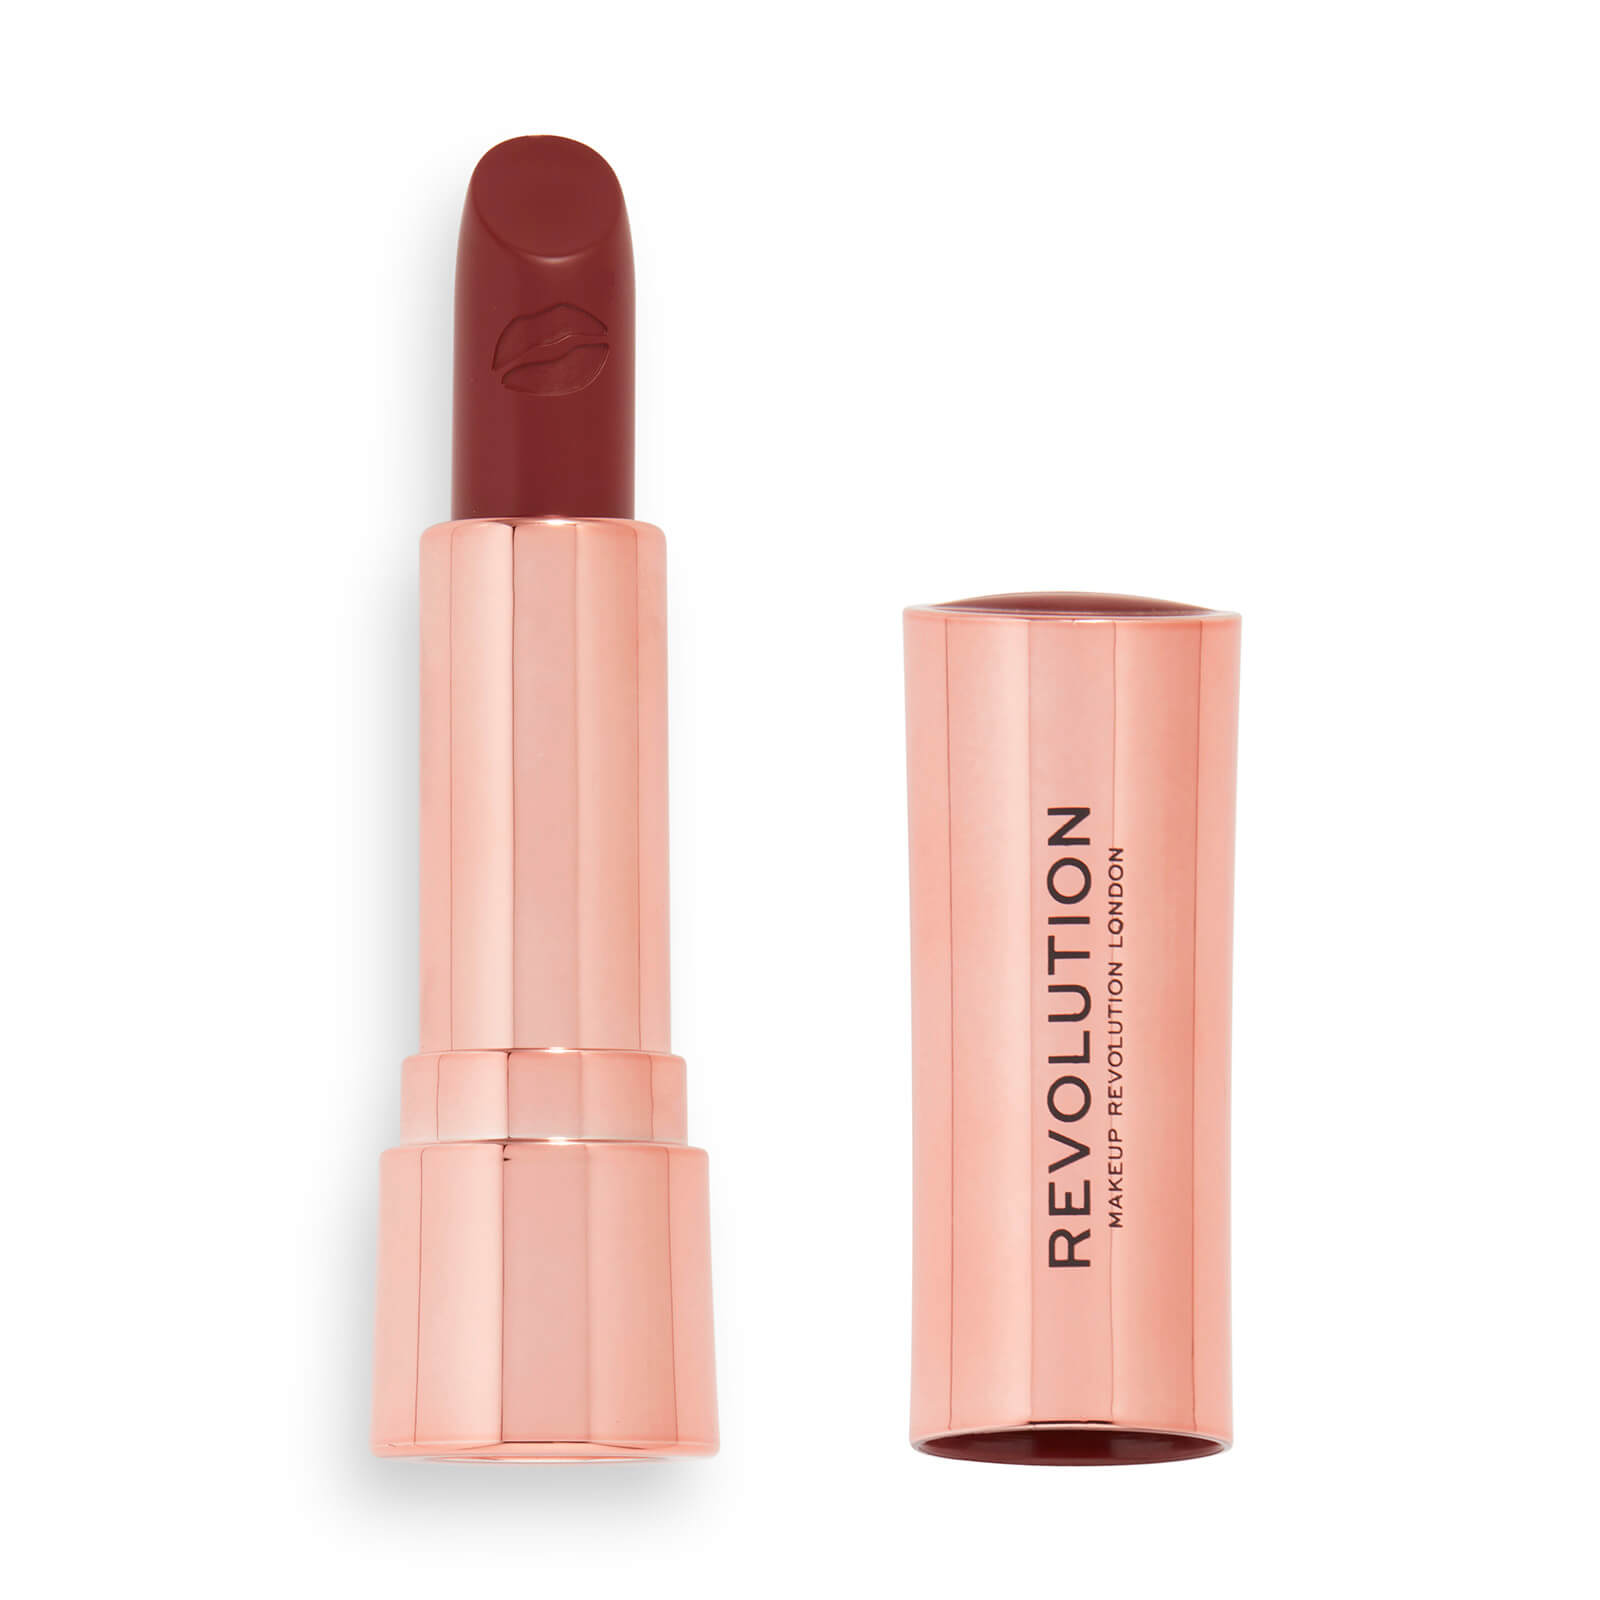 Revolution Beauty’s Satin Kiss Lipsticks offer high pigmentation and long-l...